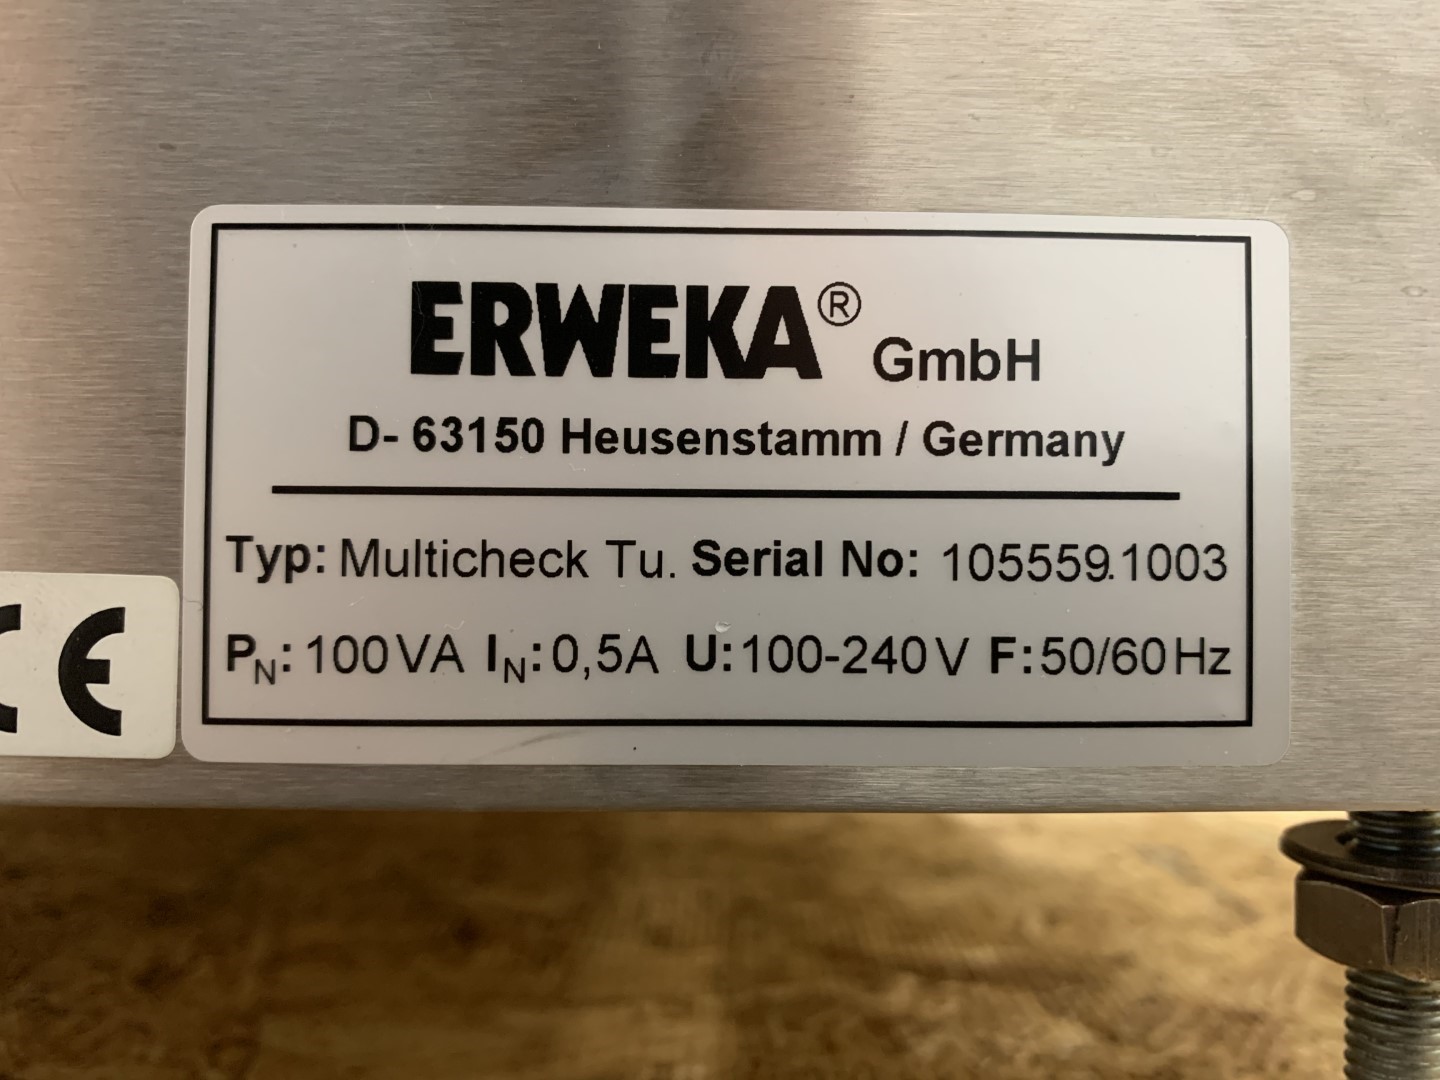 Erweka MultiChecker, model Multicheck Tu.